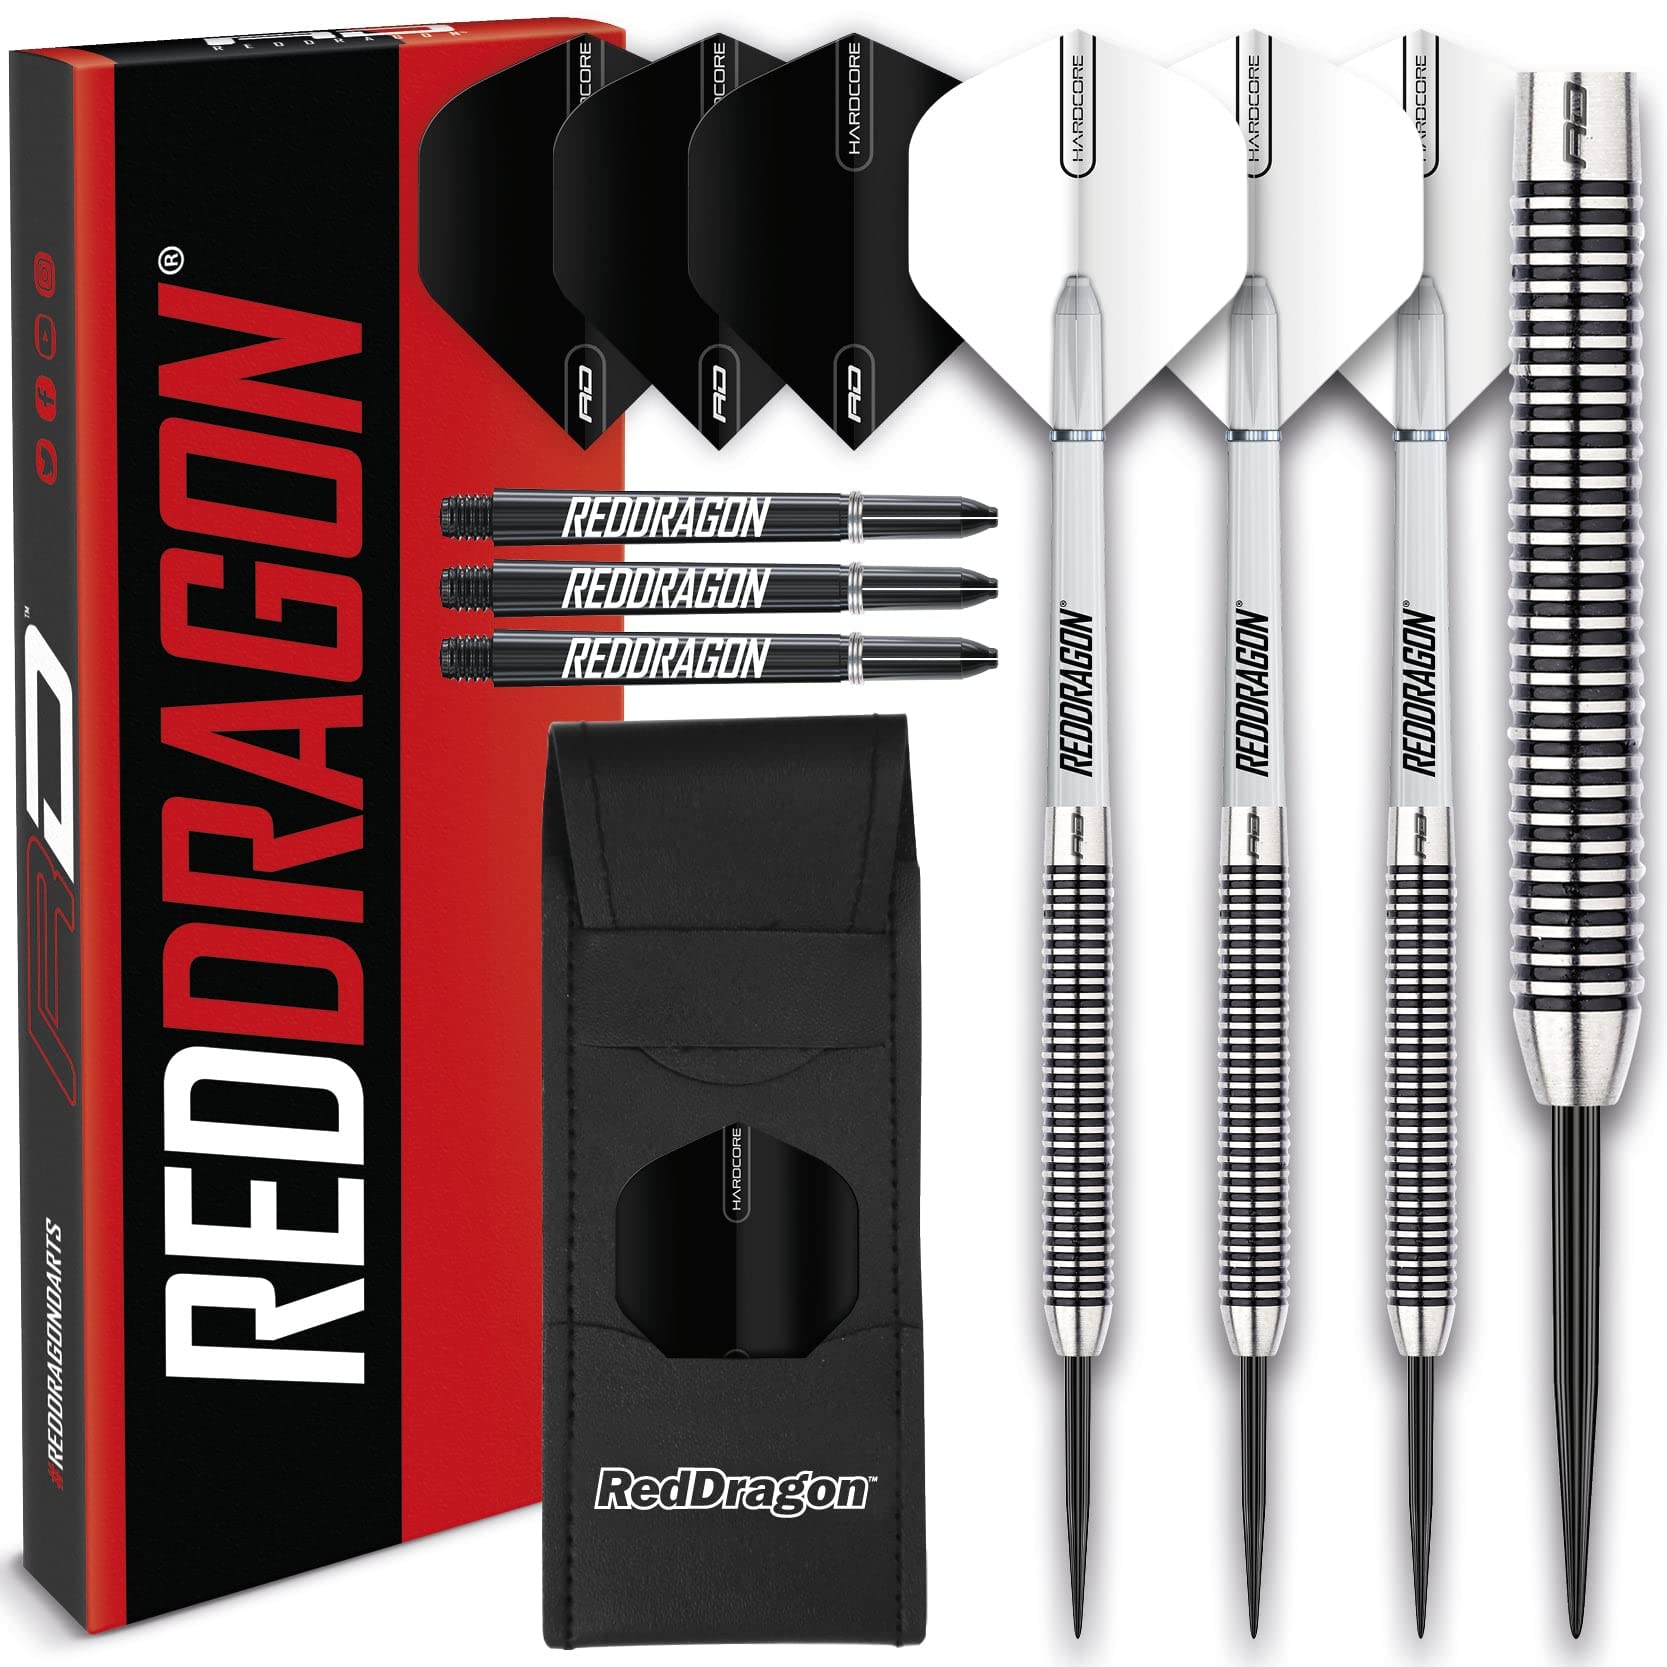 RED DRAGON Pegasus Tungsten Steel Darts Set - 30 Gram - White Shafts, White Extra Thick Flights and Case